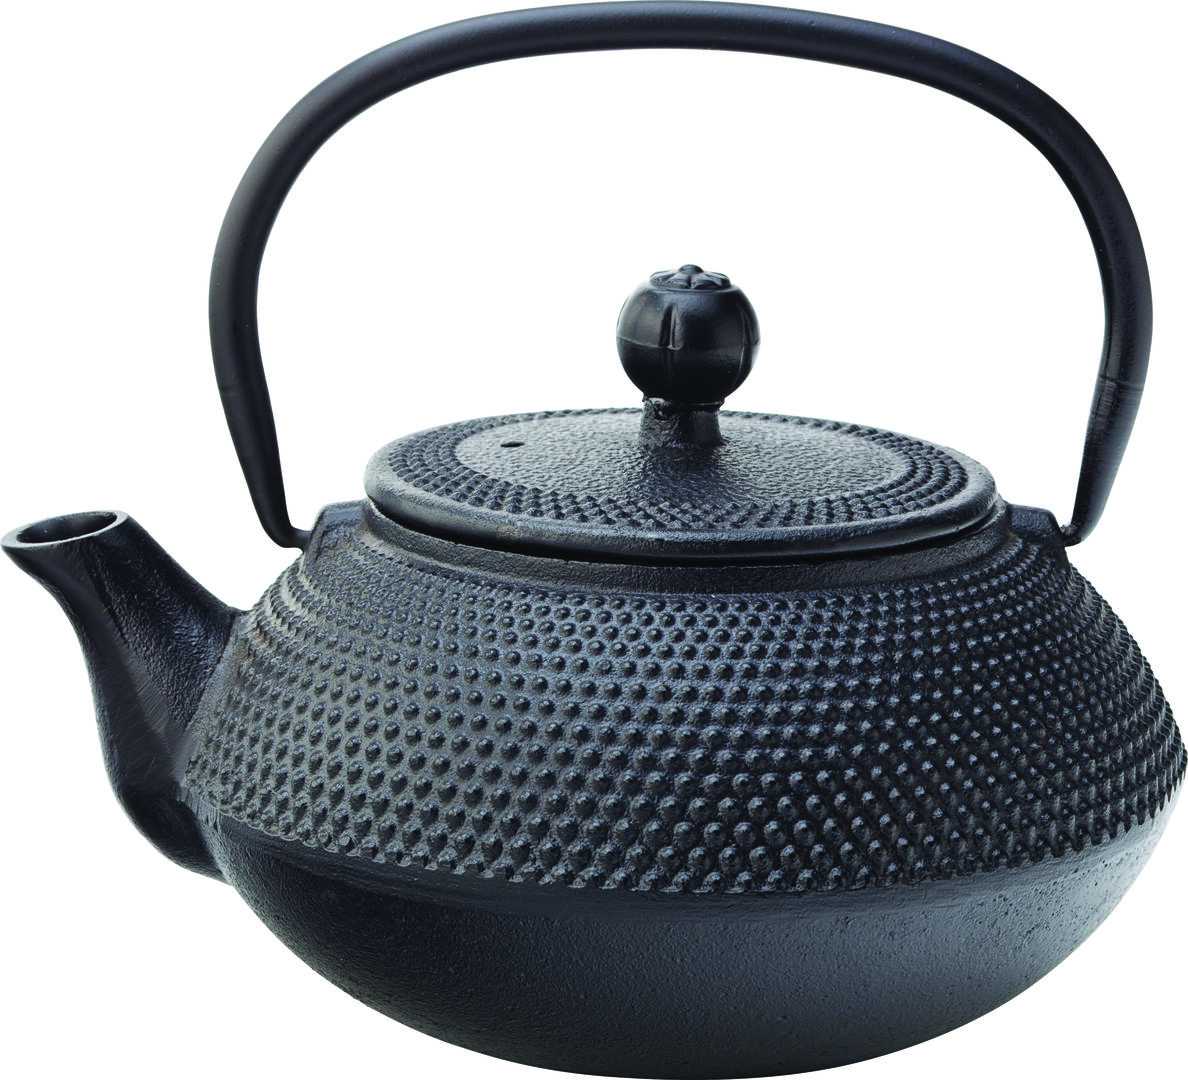 UTOPIA Mandarin Teapot Black 24oz (67cl) - with Infuser